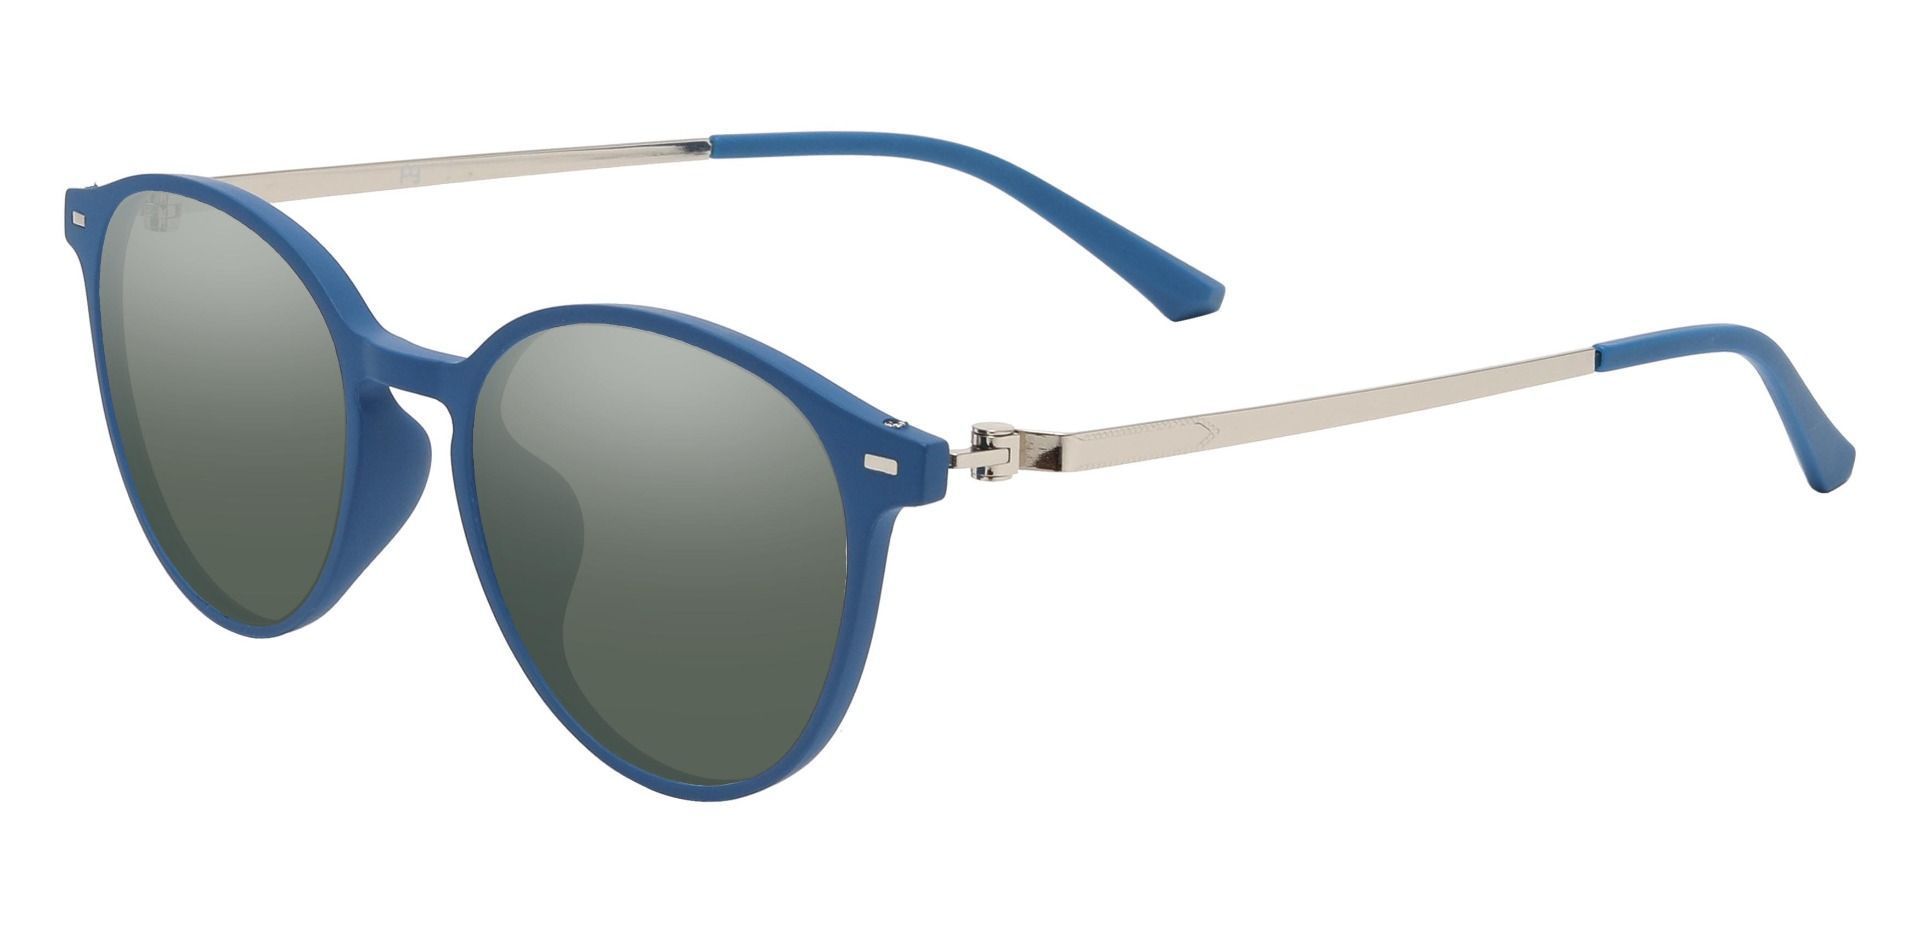 Springer Round Lined Bifocal Sunglasses - Blue Frame With Green Lenses